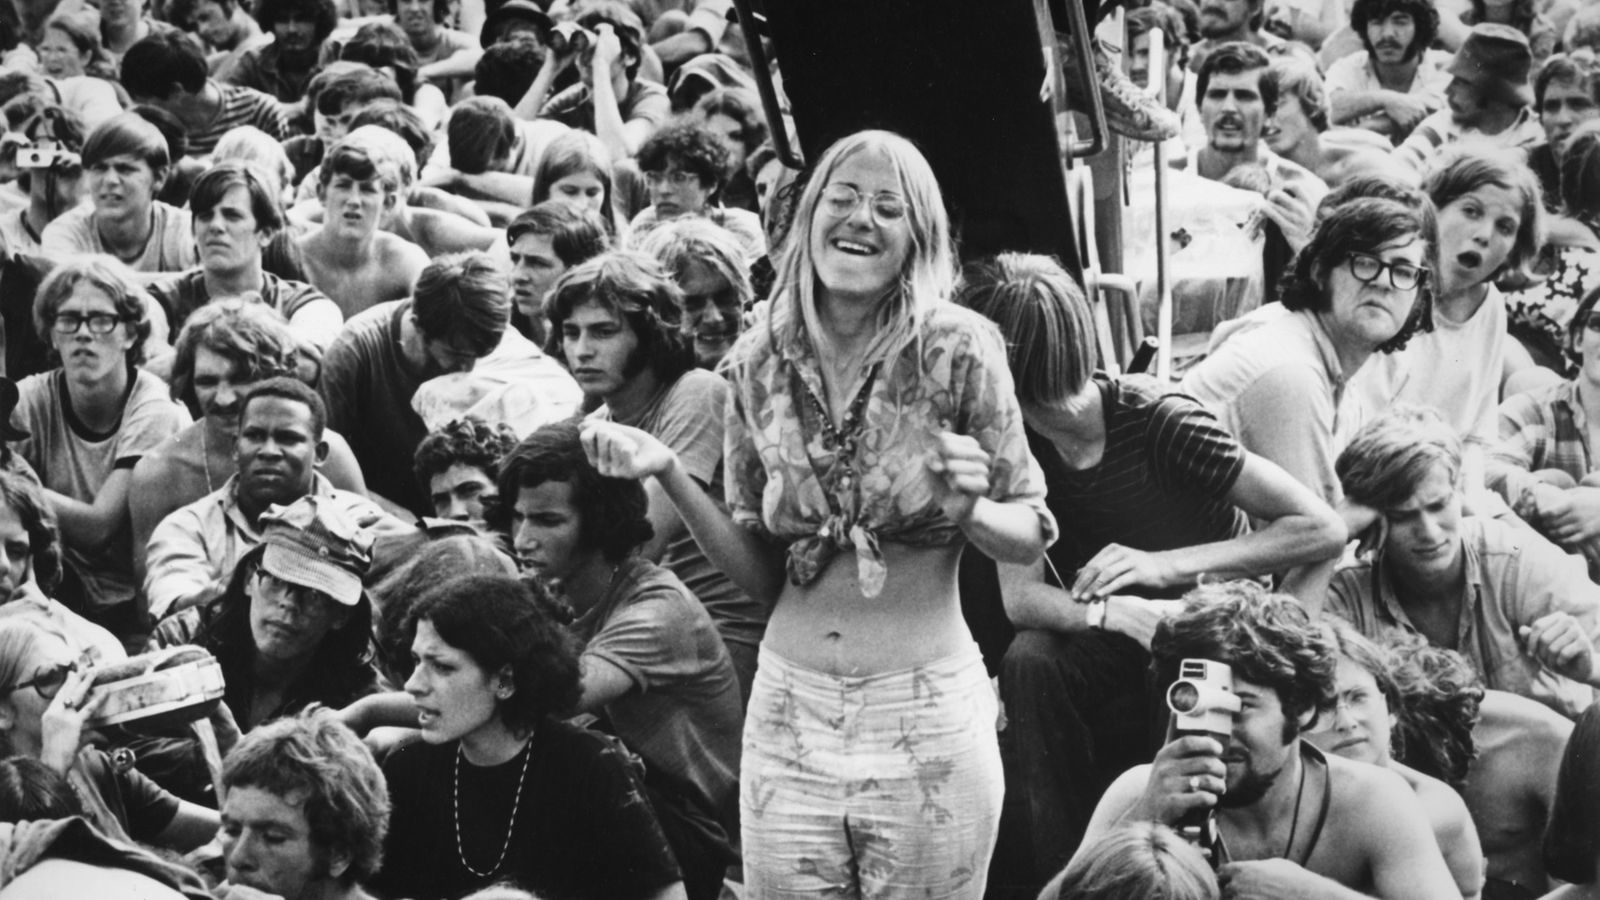 Take A Trip To Woodstock Dokumentationen Rockpalast Fernsehen Wdr